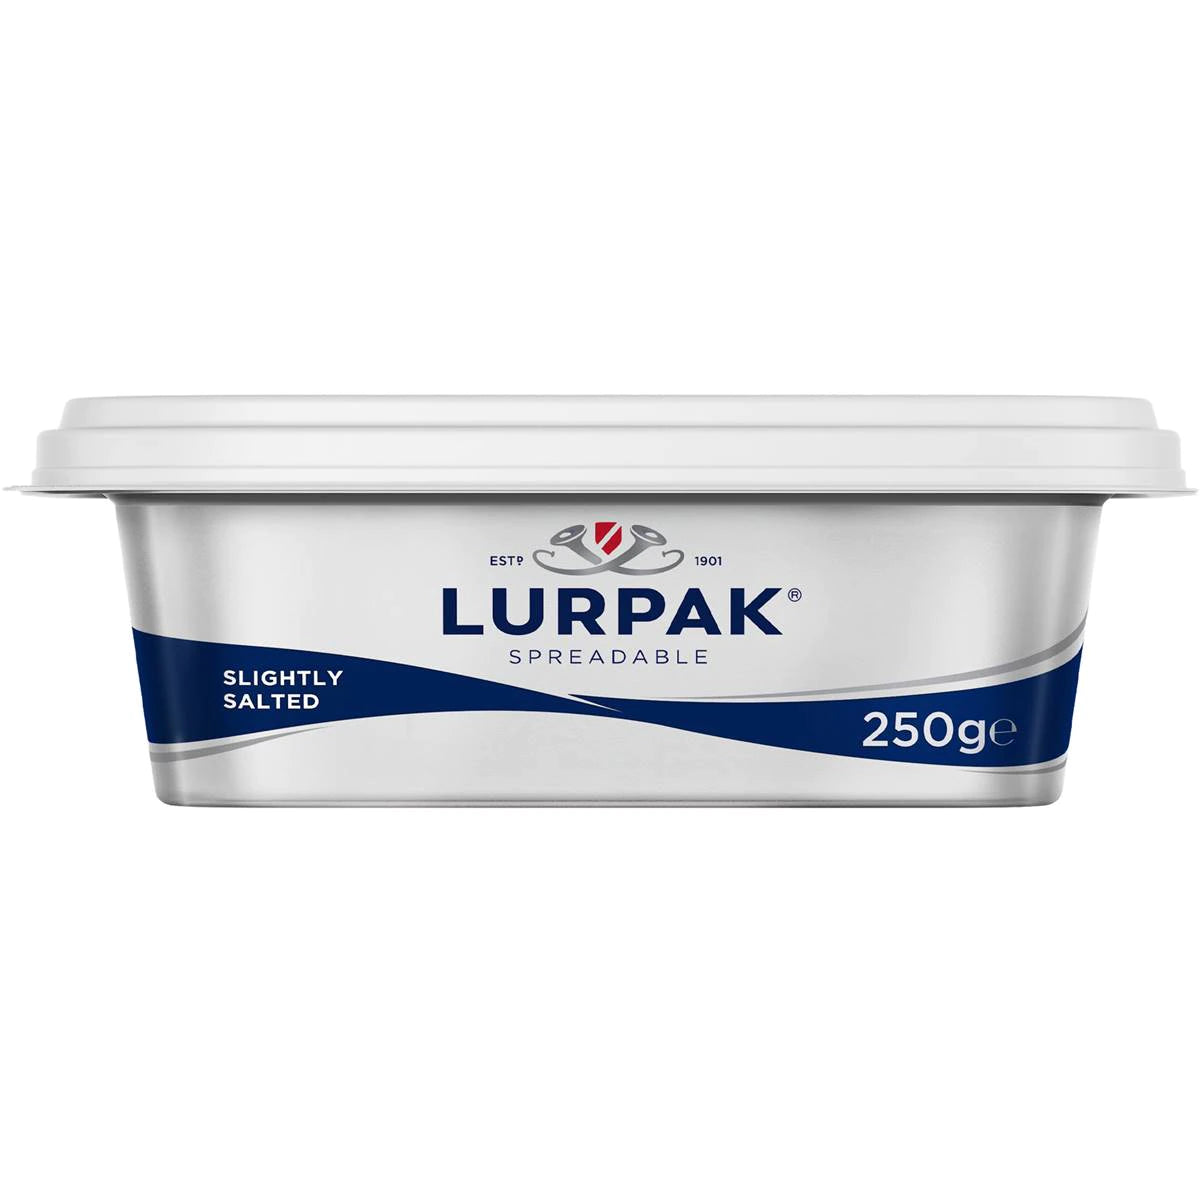 Lurpak Spreadable Butter Salted 250g